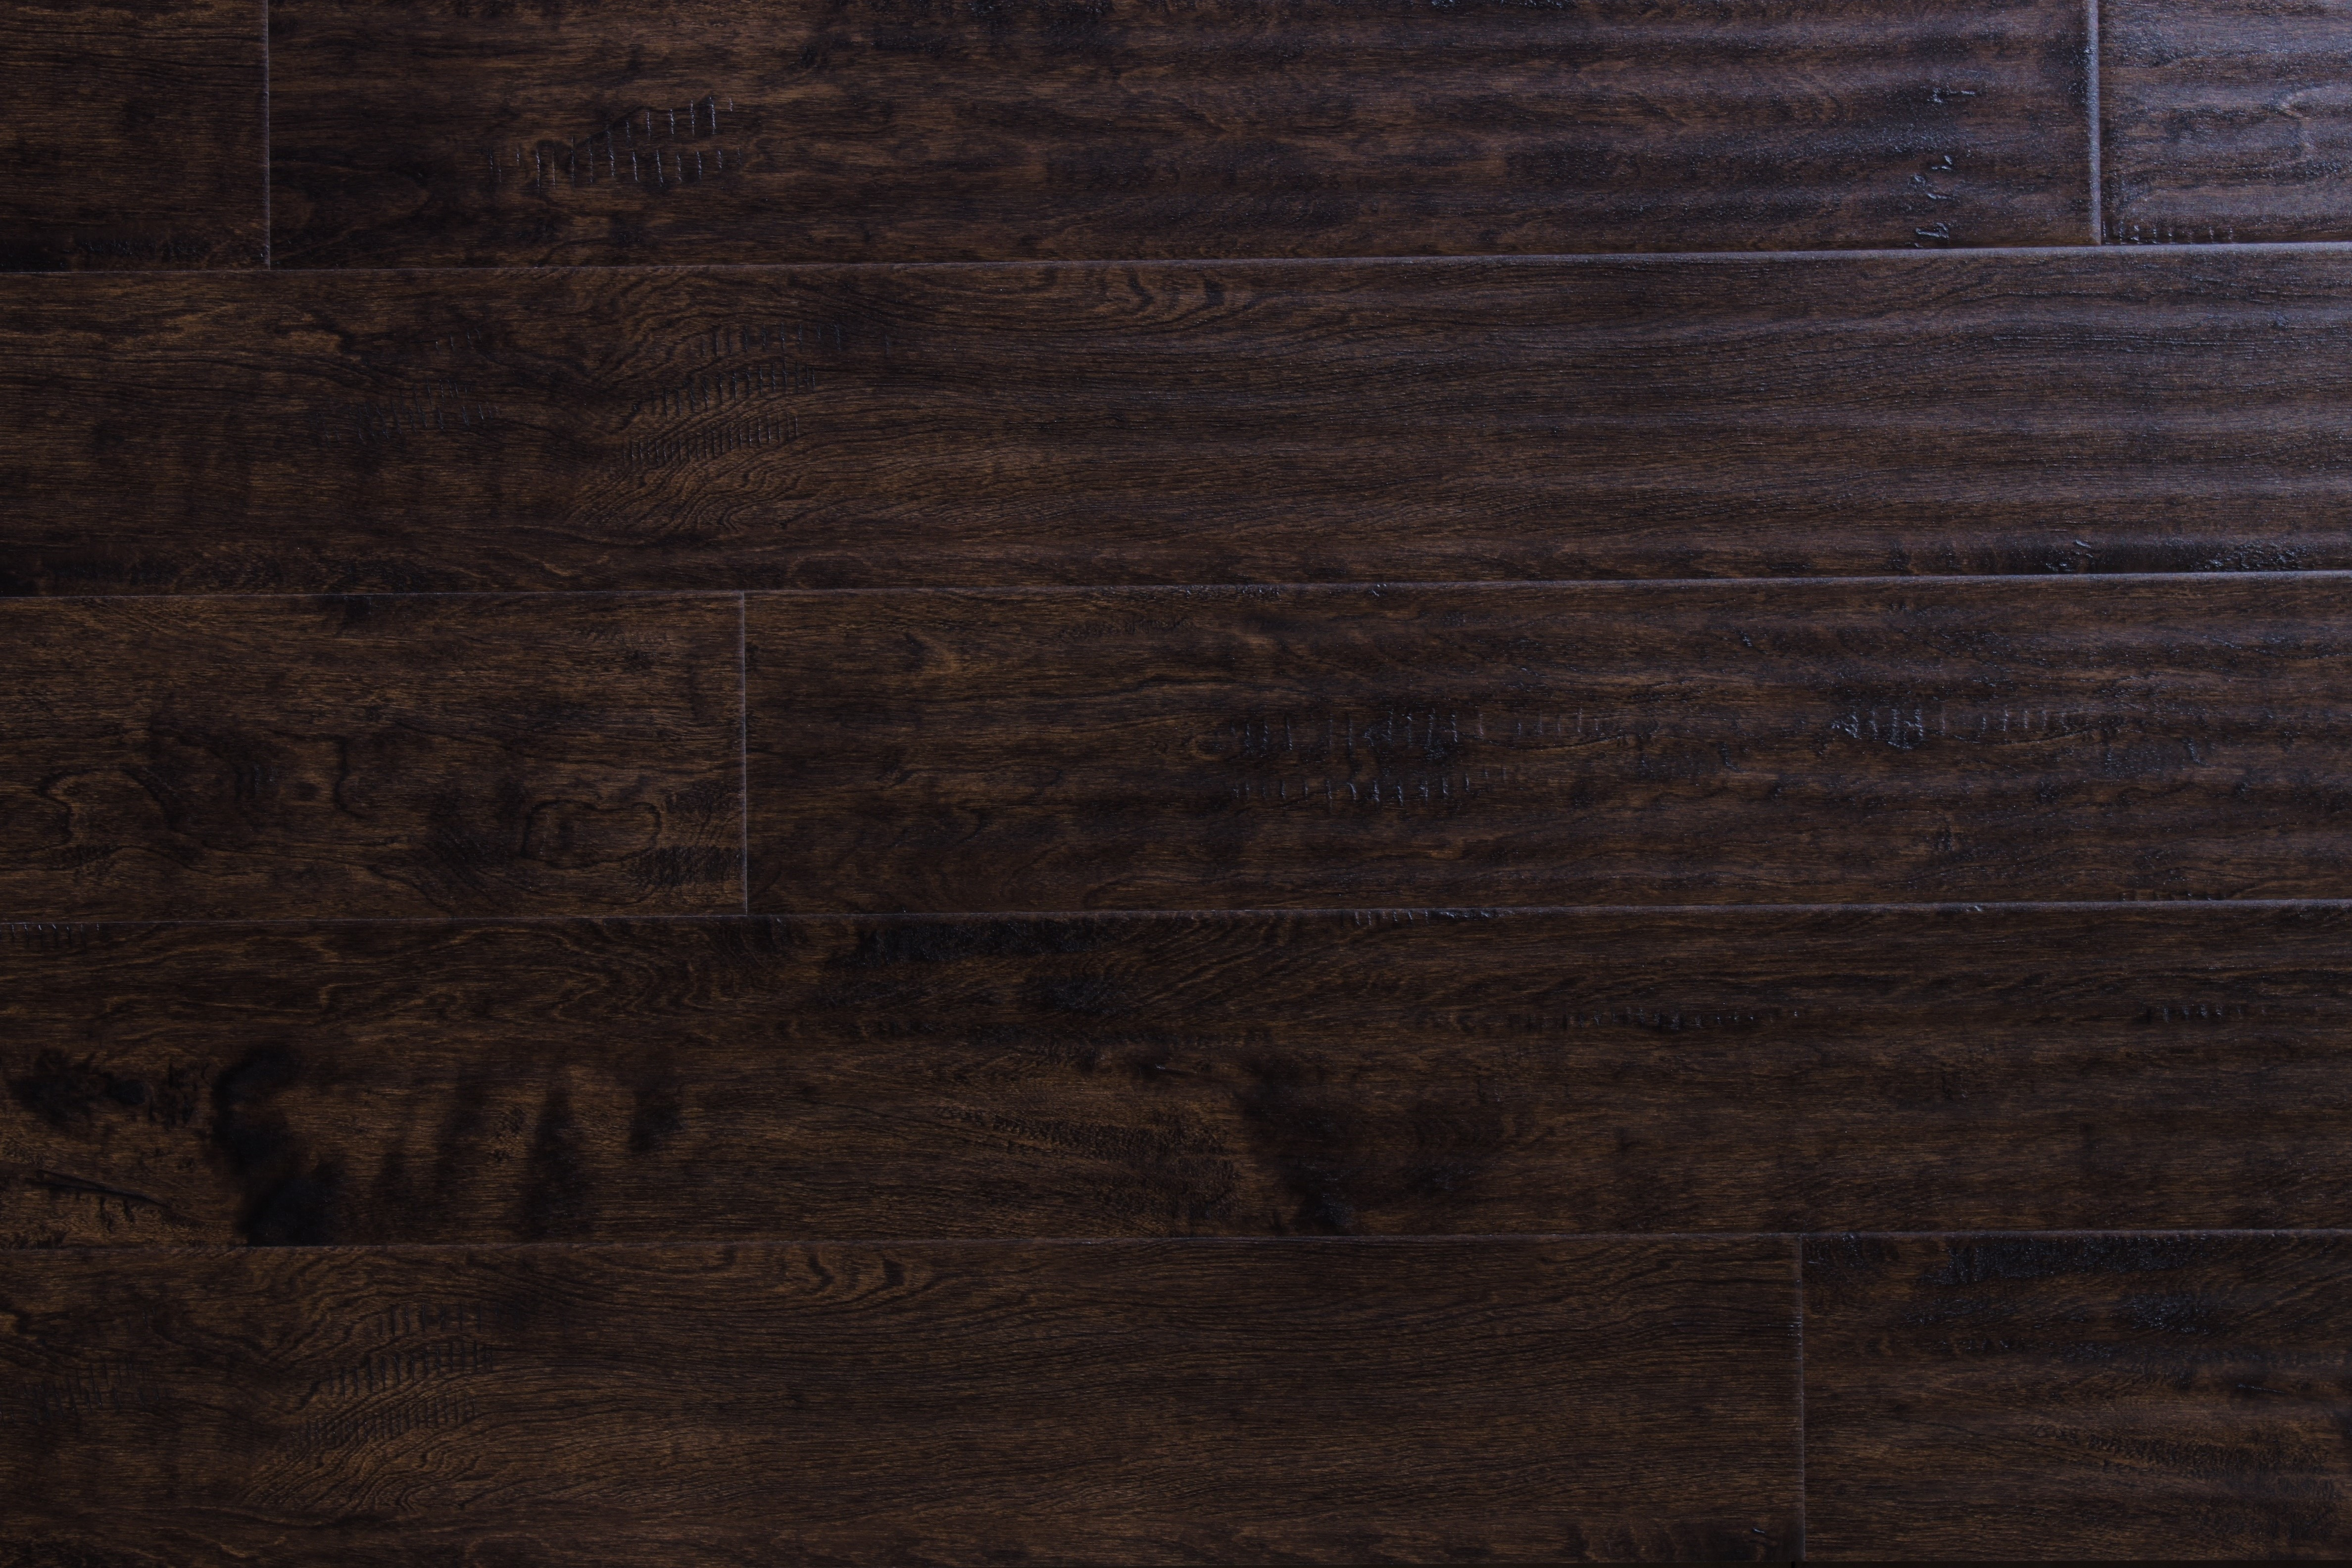 Bruce Maple Cinnamon Hardwood Floor Of Wood Flooring Free Samples Available at Builddirecta Regarding Tailor Multi Gb 5874277bb8d3c